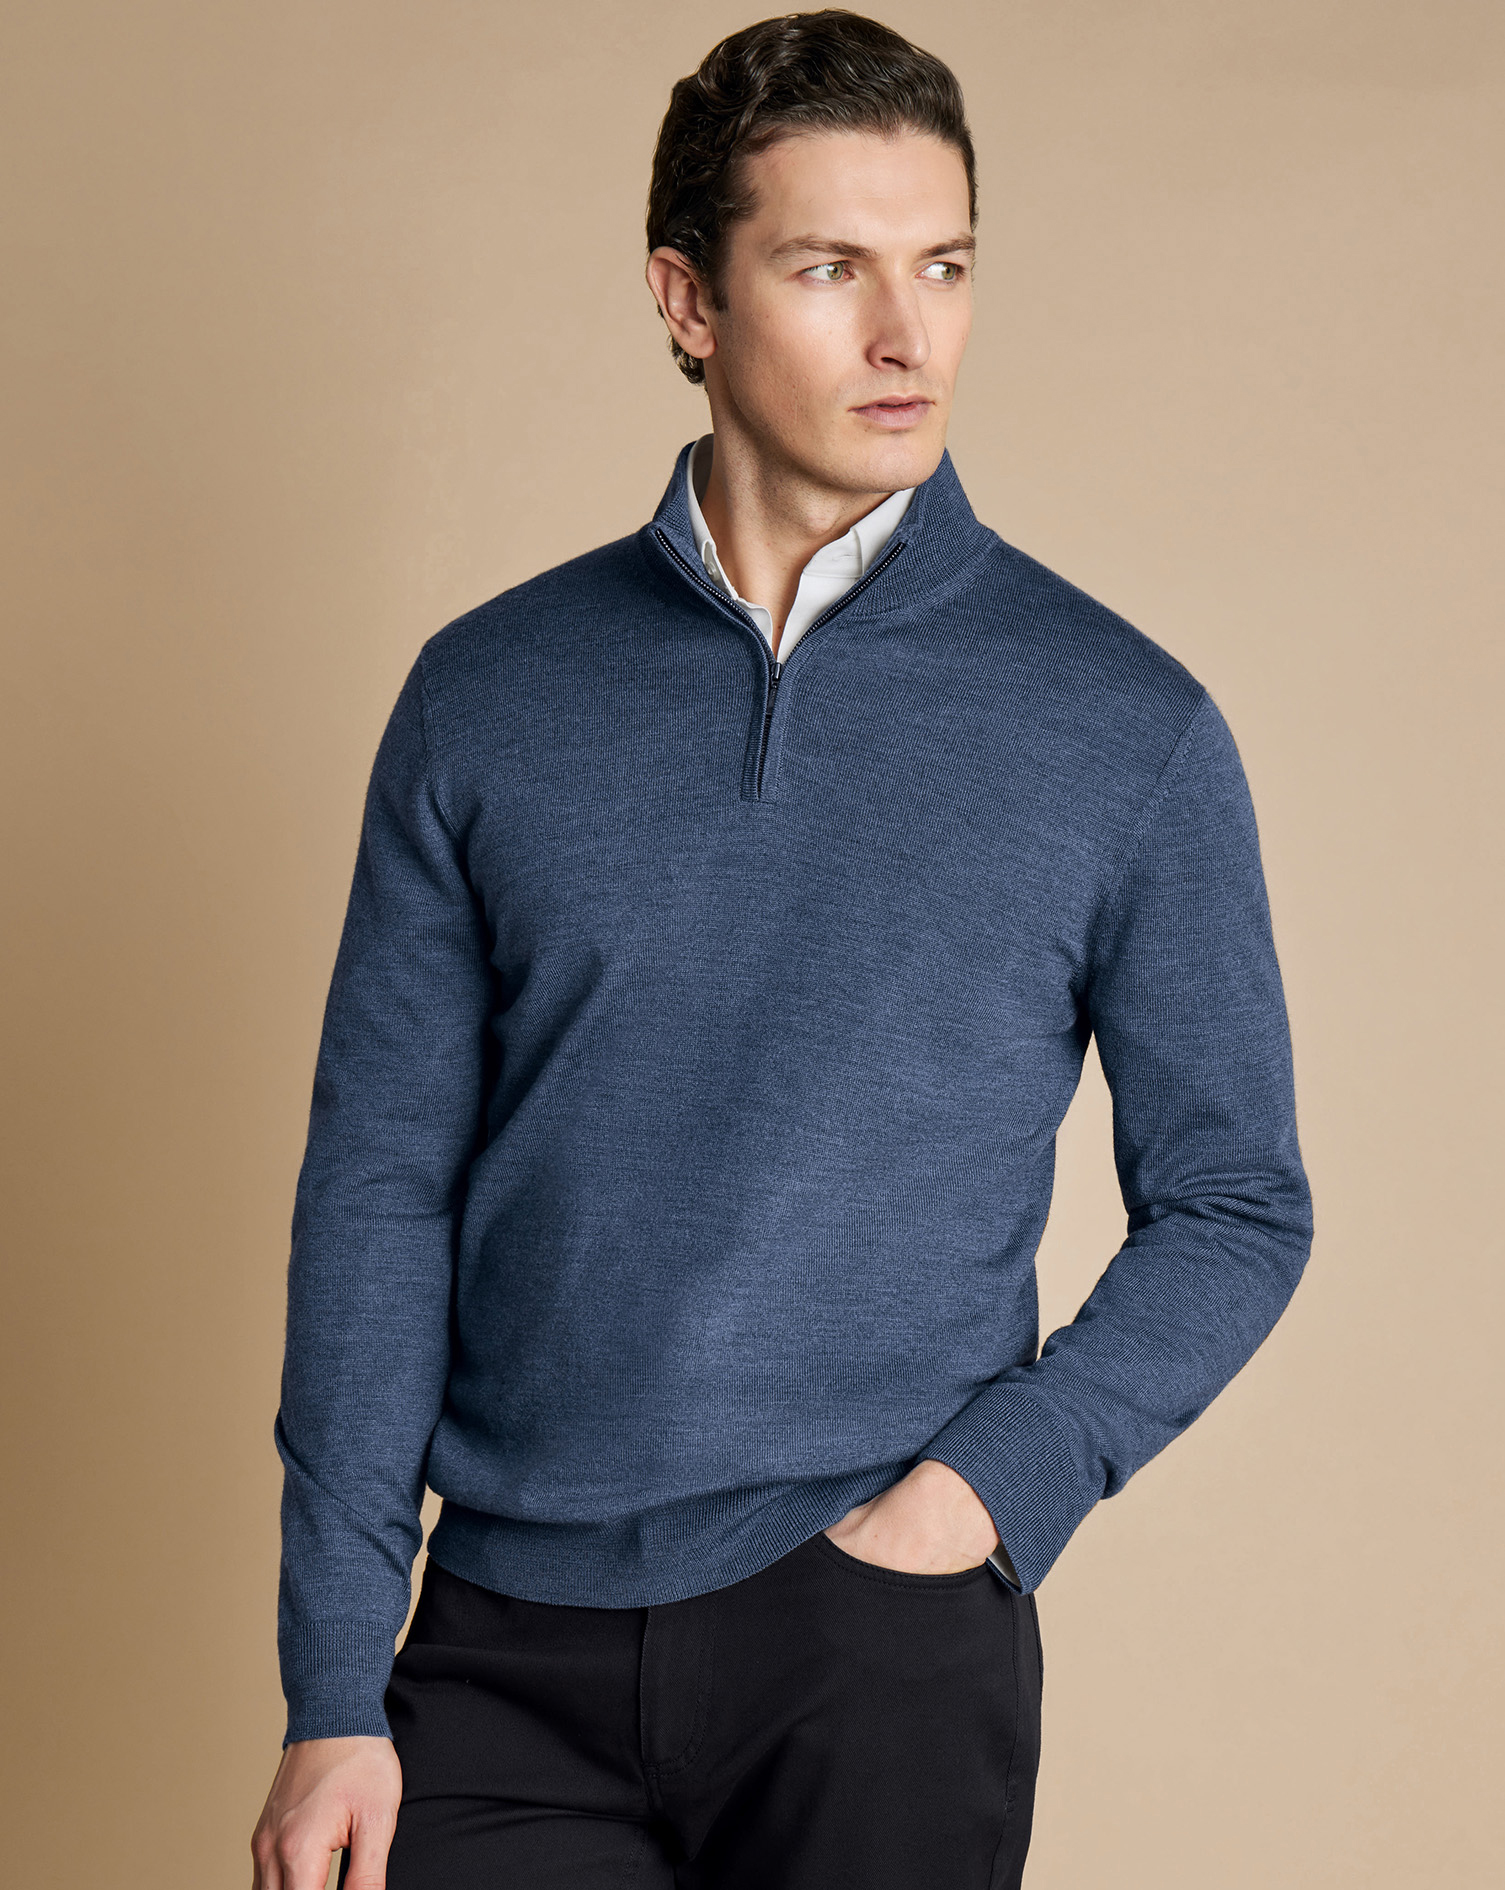 Men's Charles Tyrwhitt Zip Neck Sweater - Indigo Melange Blue Size Medium Merino
